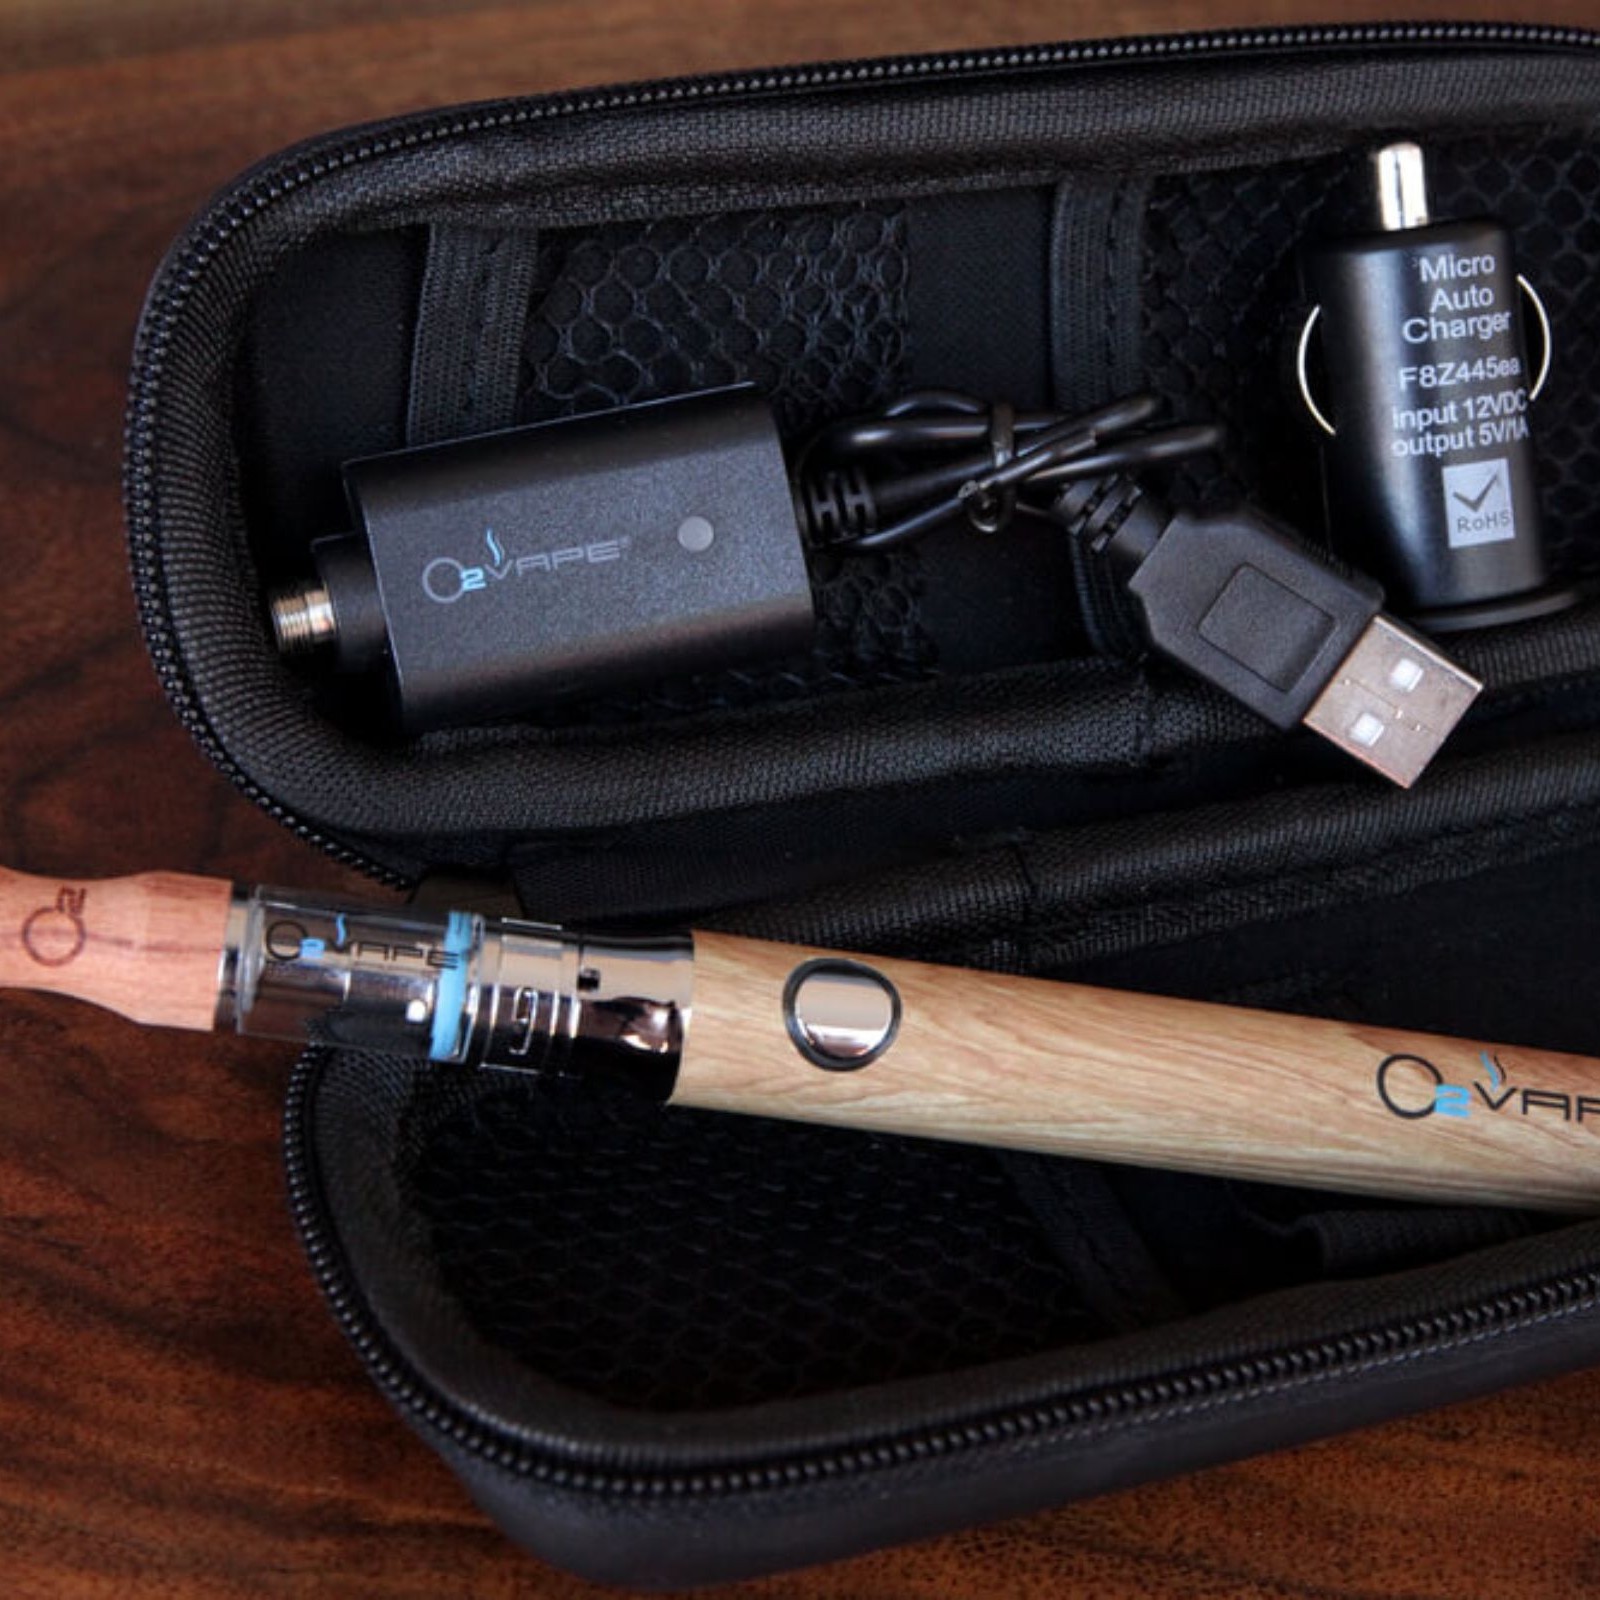 O2VAPE: Vape Pen Stands - Handcrafted Natural Wood